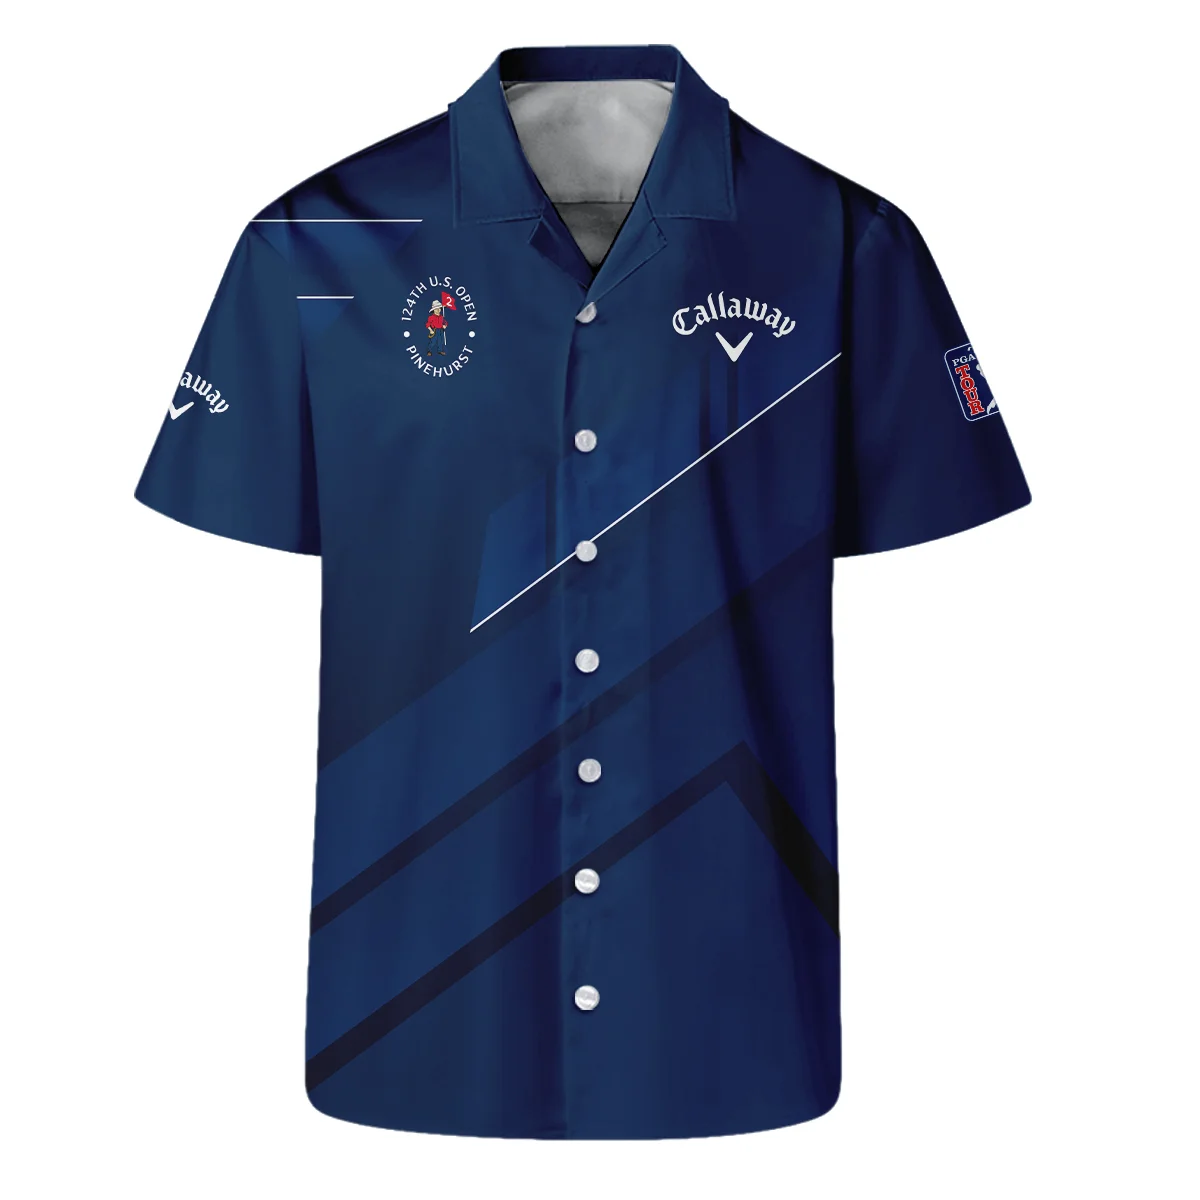 Callaway 124th U.S. Open Pinehurst Blue Gradient With White Straight Line Sleeveless Jacket Style Classic Sleeveless Jacket